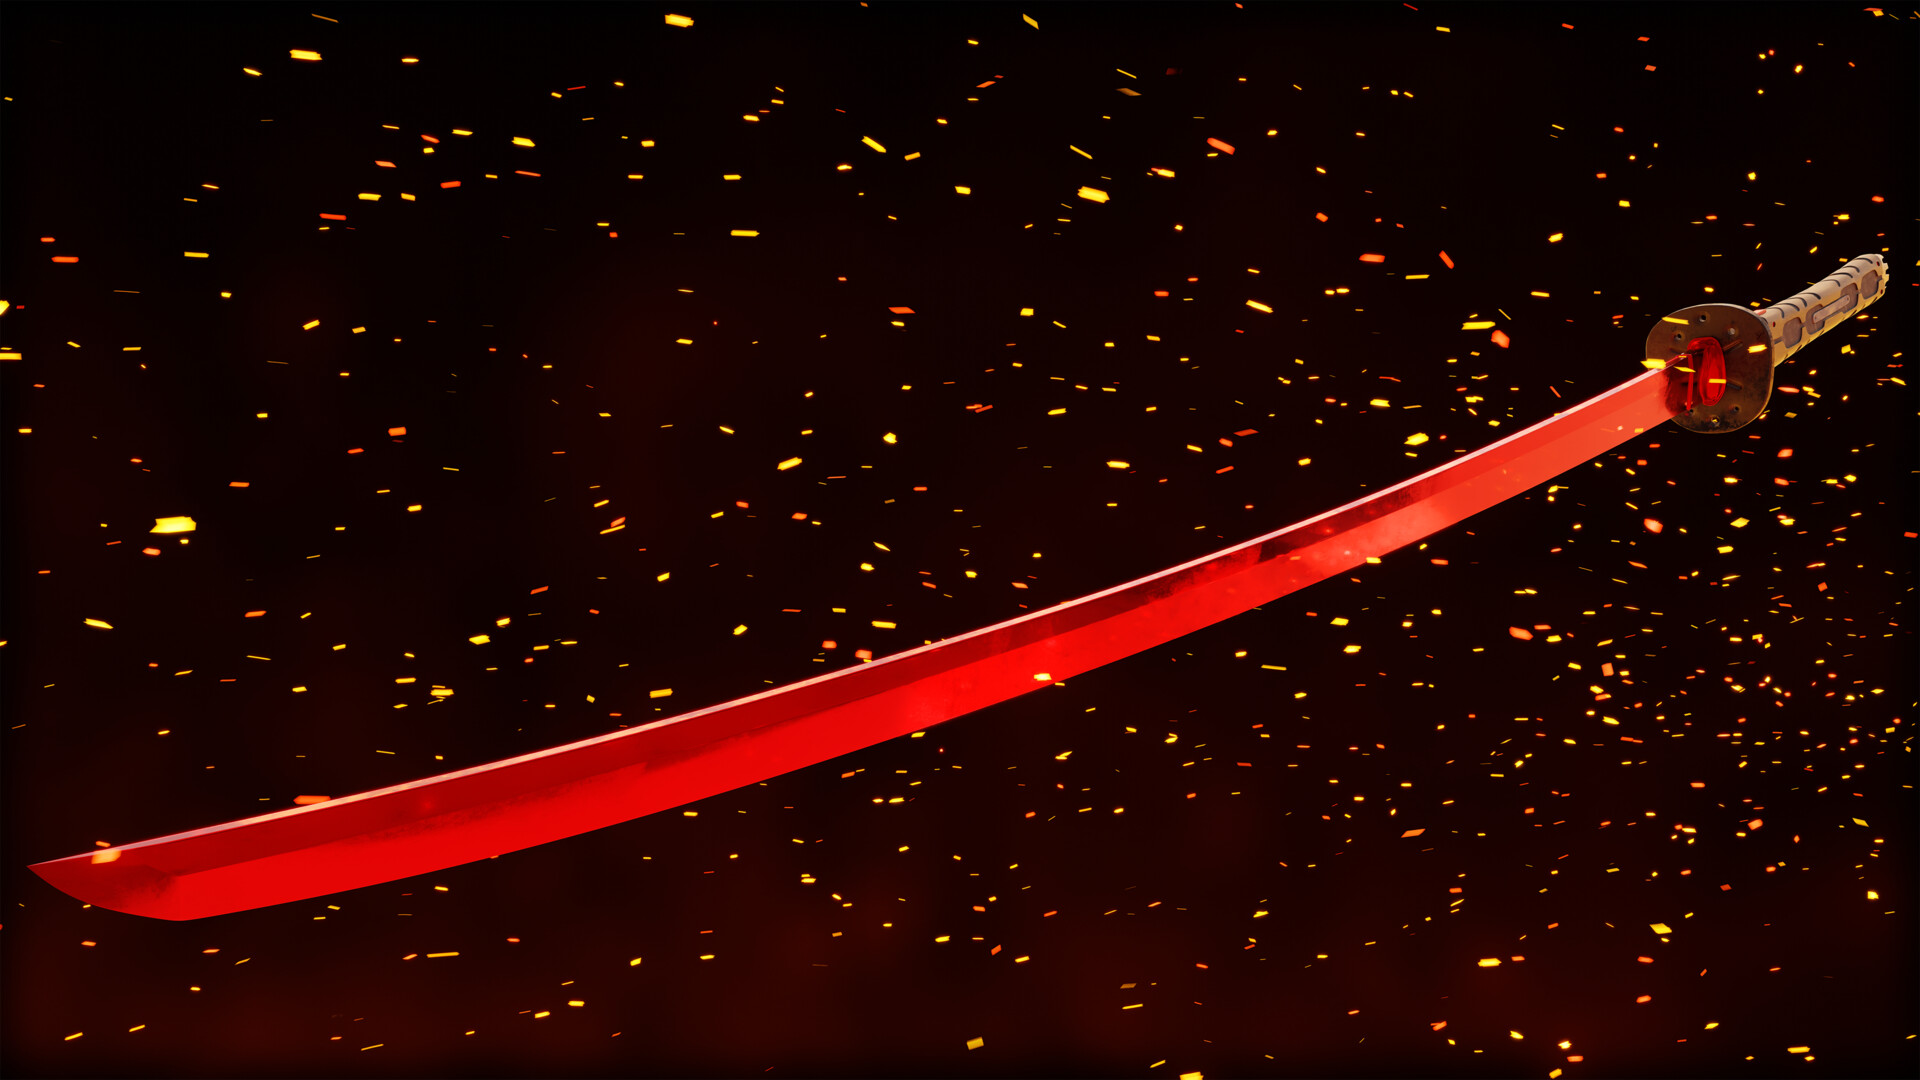 High-Frequency Murasama sword by brickyphone (crosspost with  r/TwoBestFriendsPlay) : r/metalgearrising